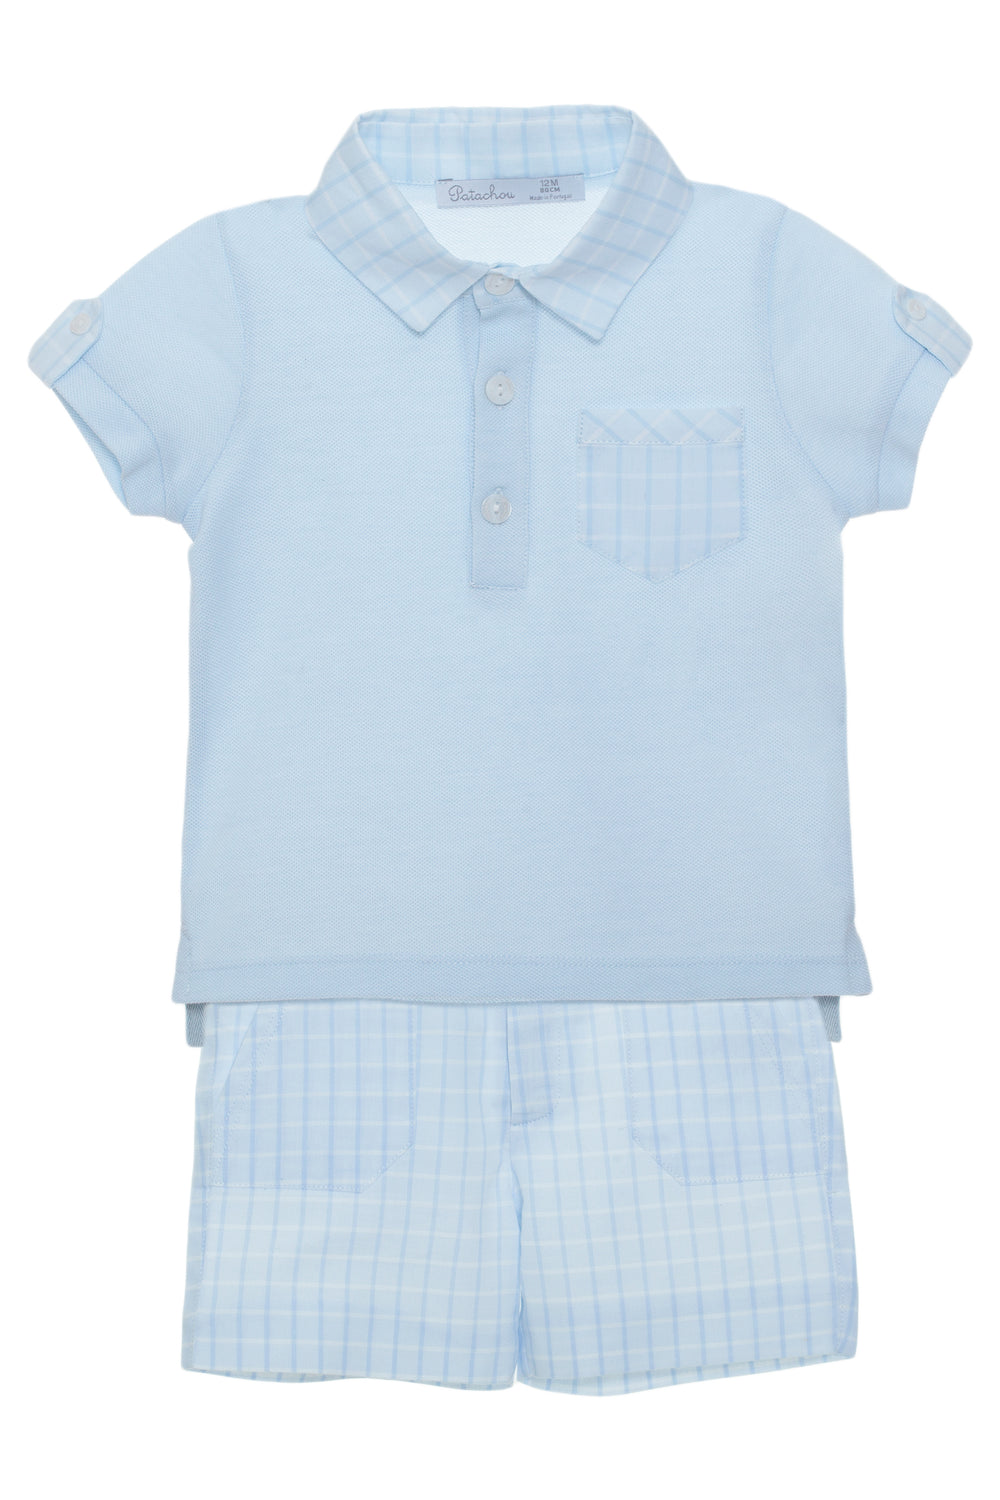 Patachou "Travis" Blue Polo Shirt & Shorts | Millie and John